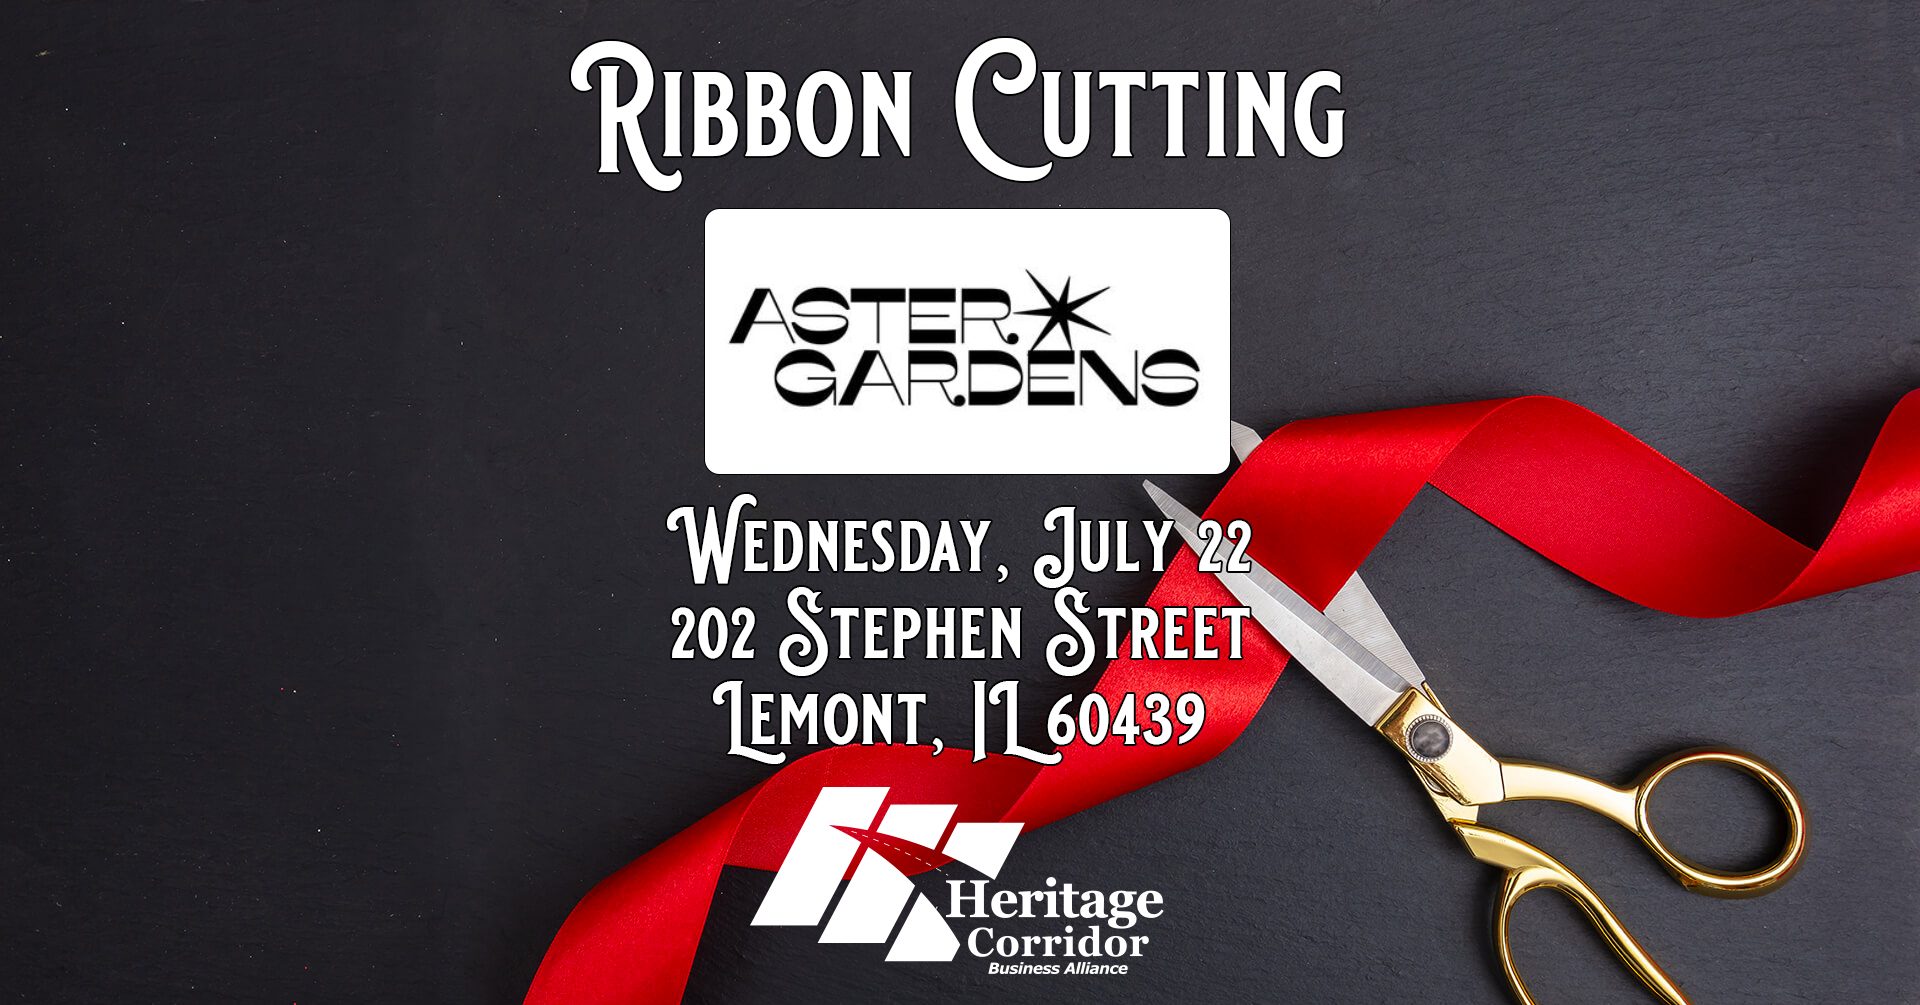 Ribbon being cut by scissors, Aster Gardens logo